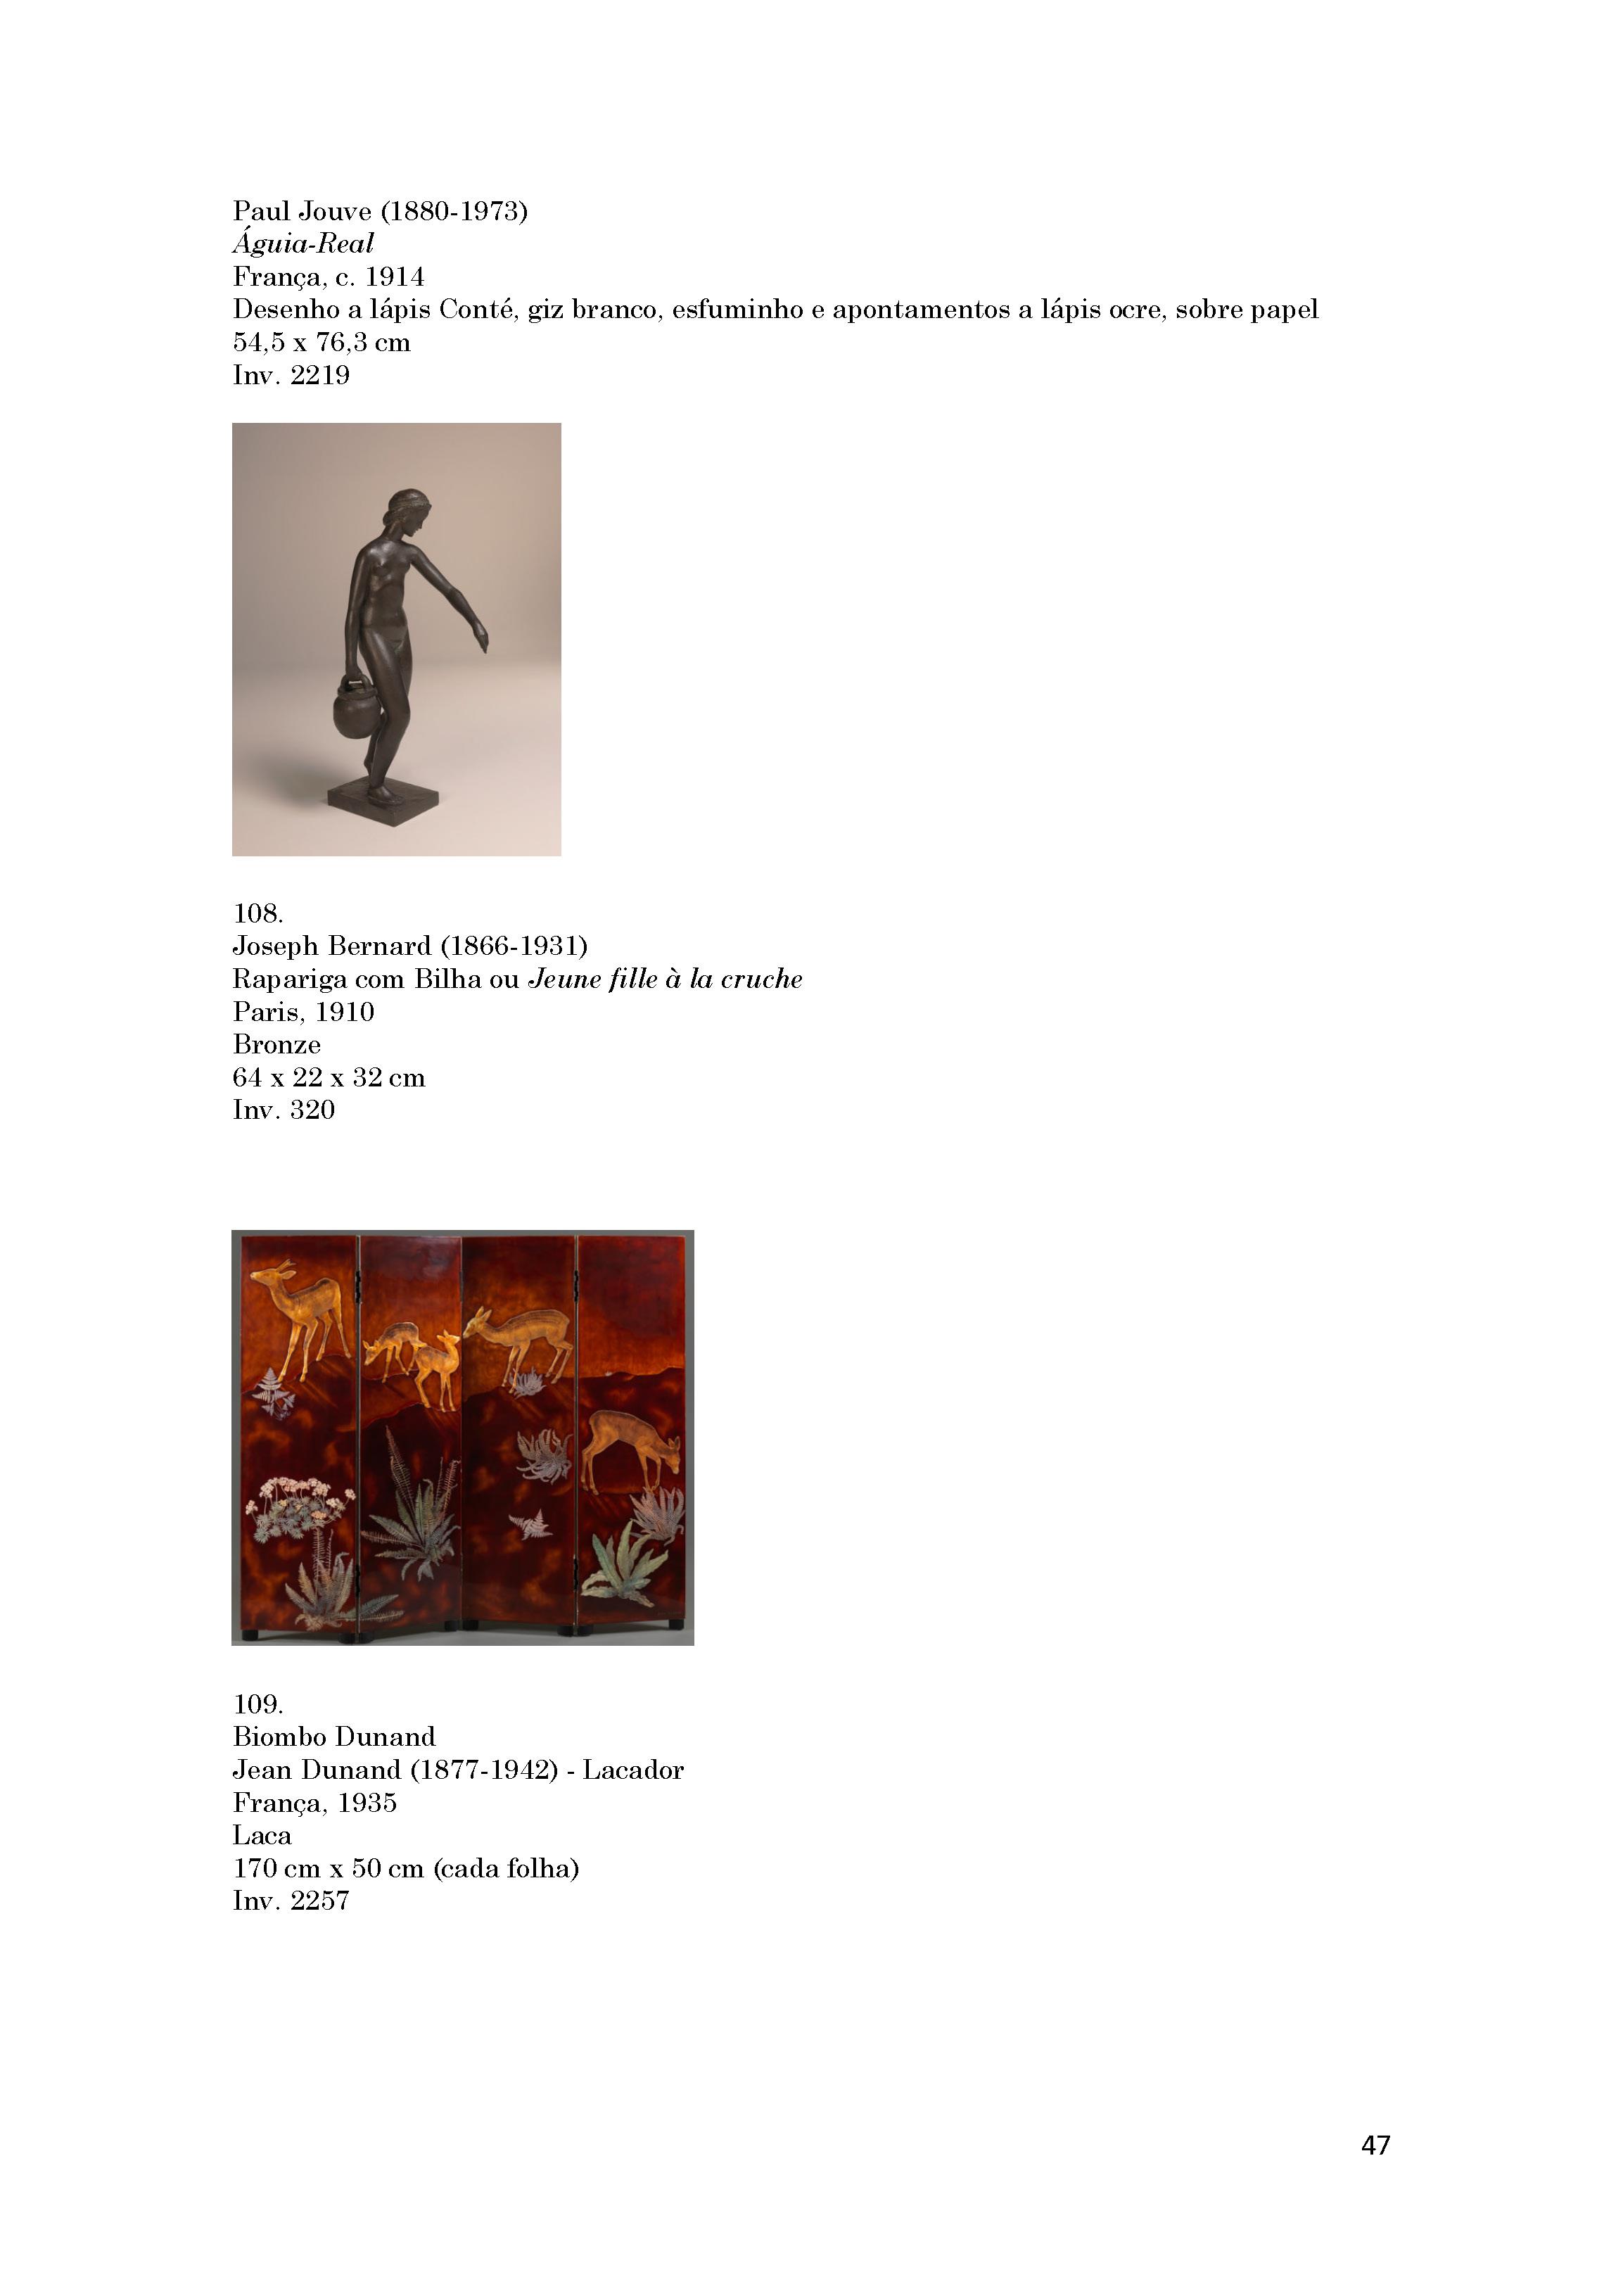 Lista_Vidros_Lalique_25.09.2020_1.47